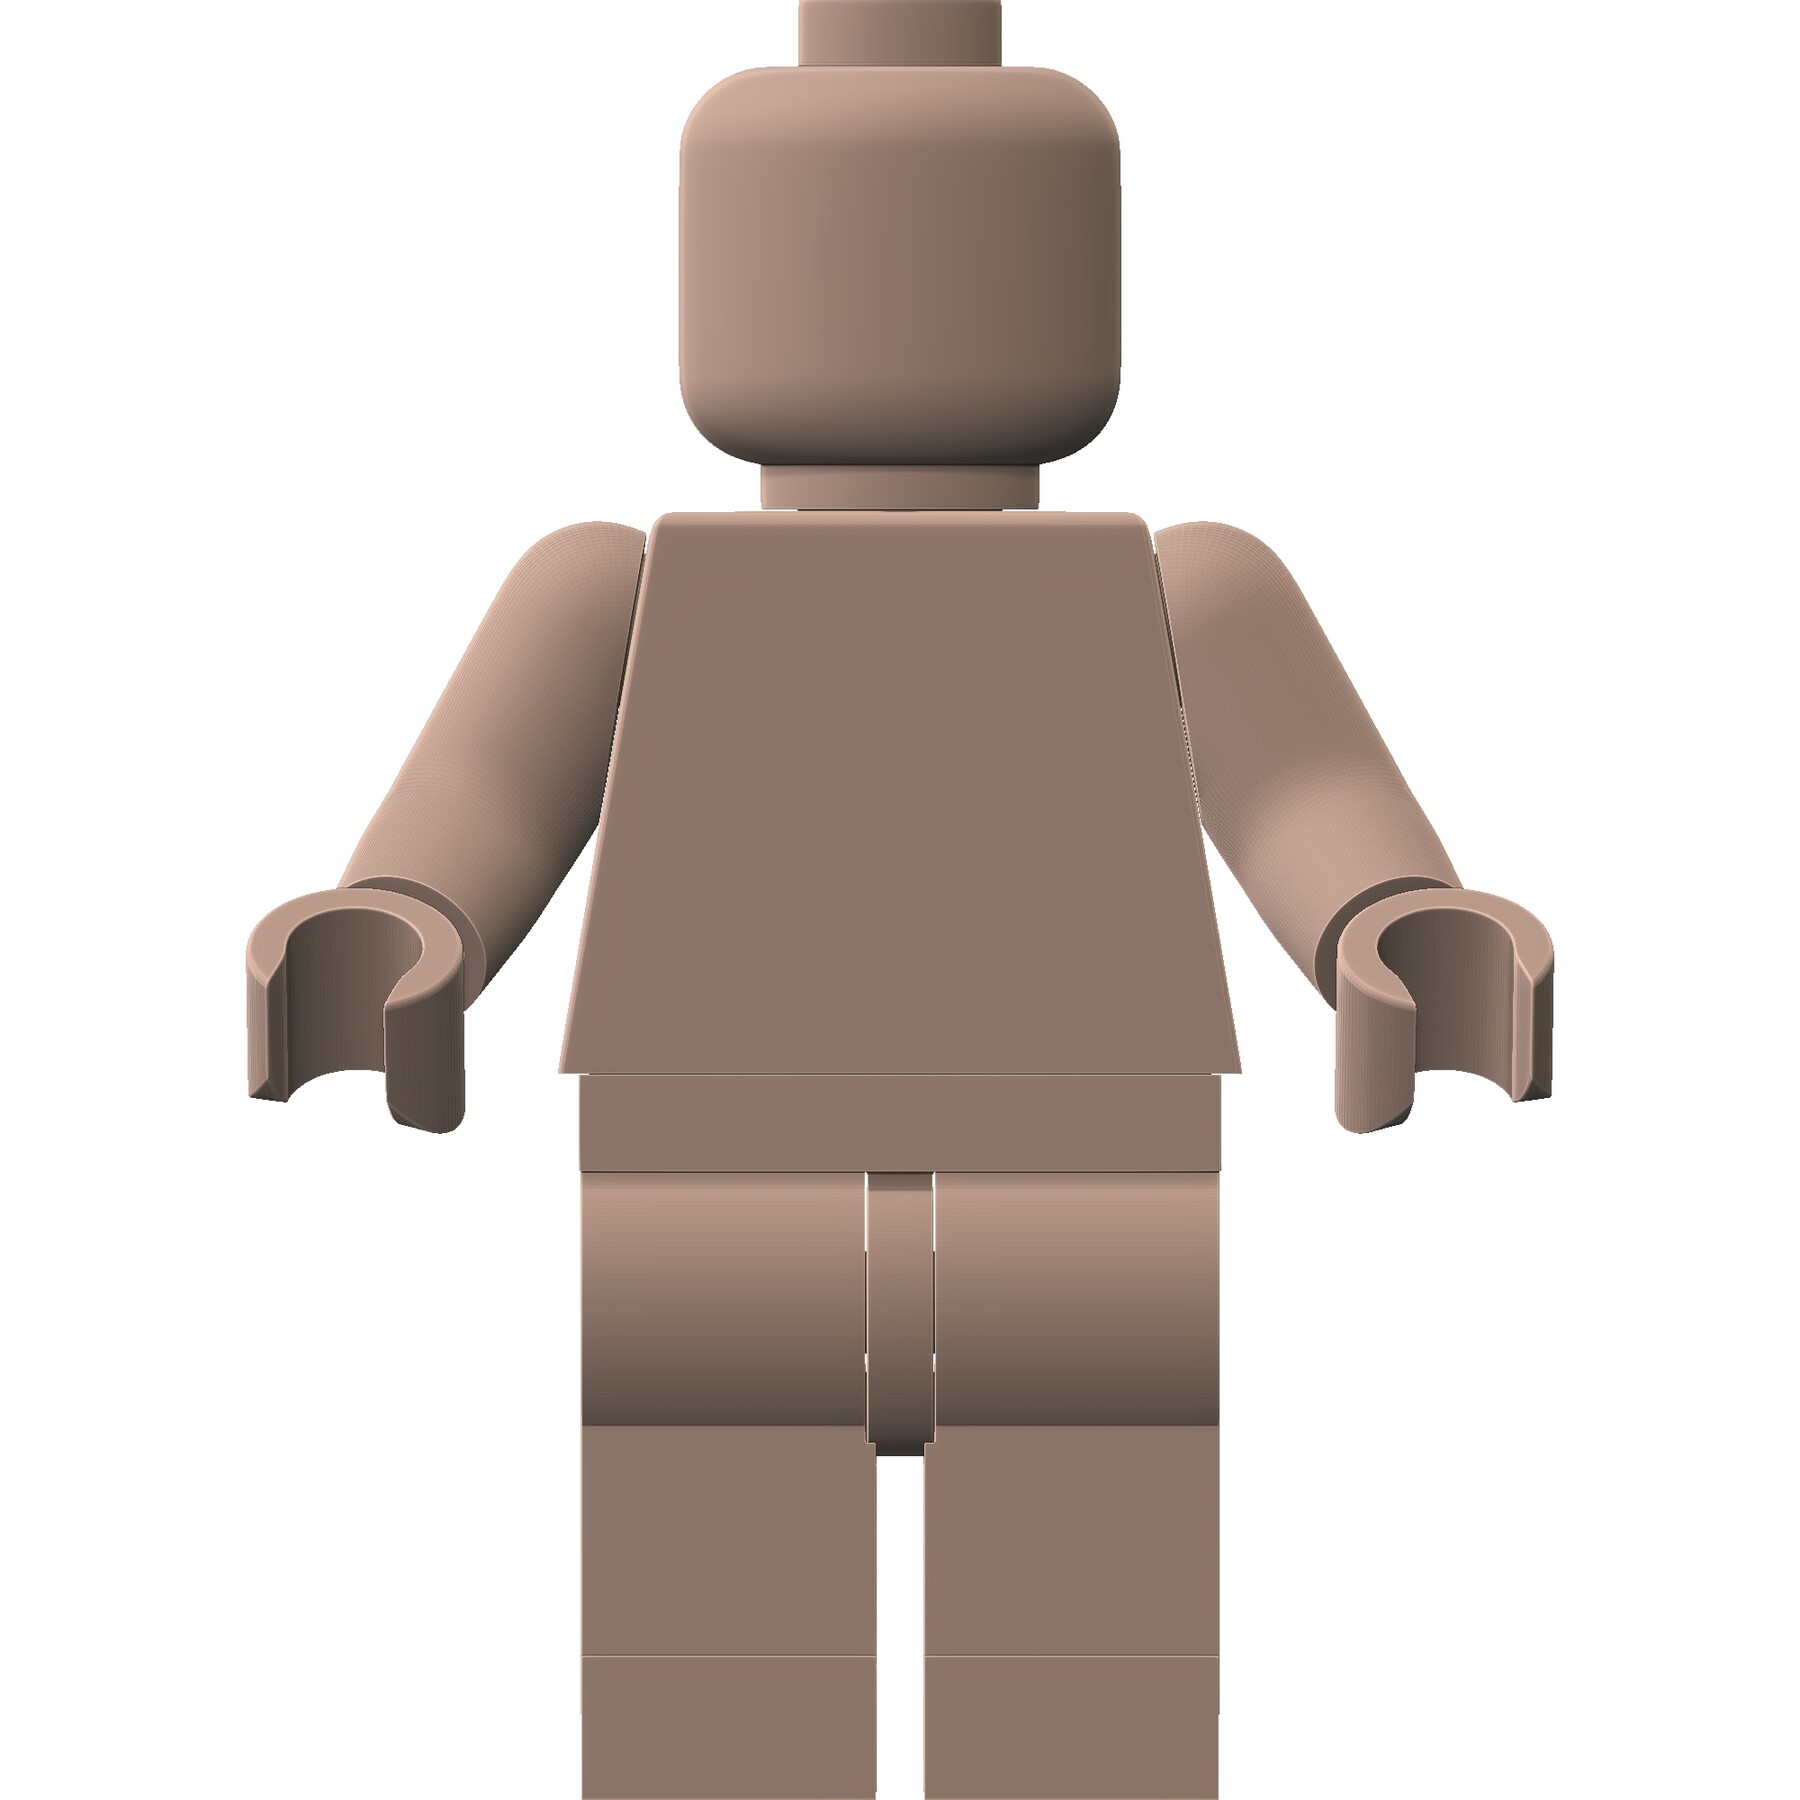 ArtStation - Lego Minifigure 3D Model